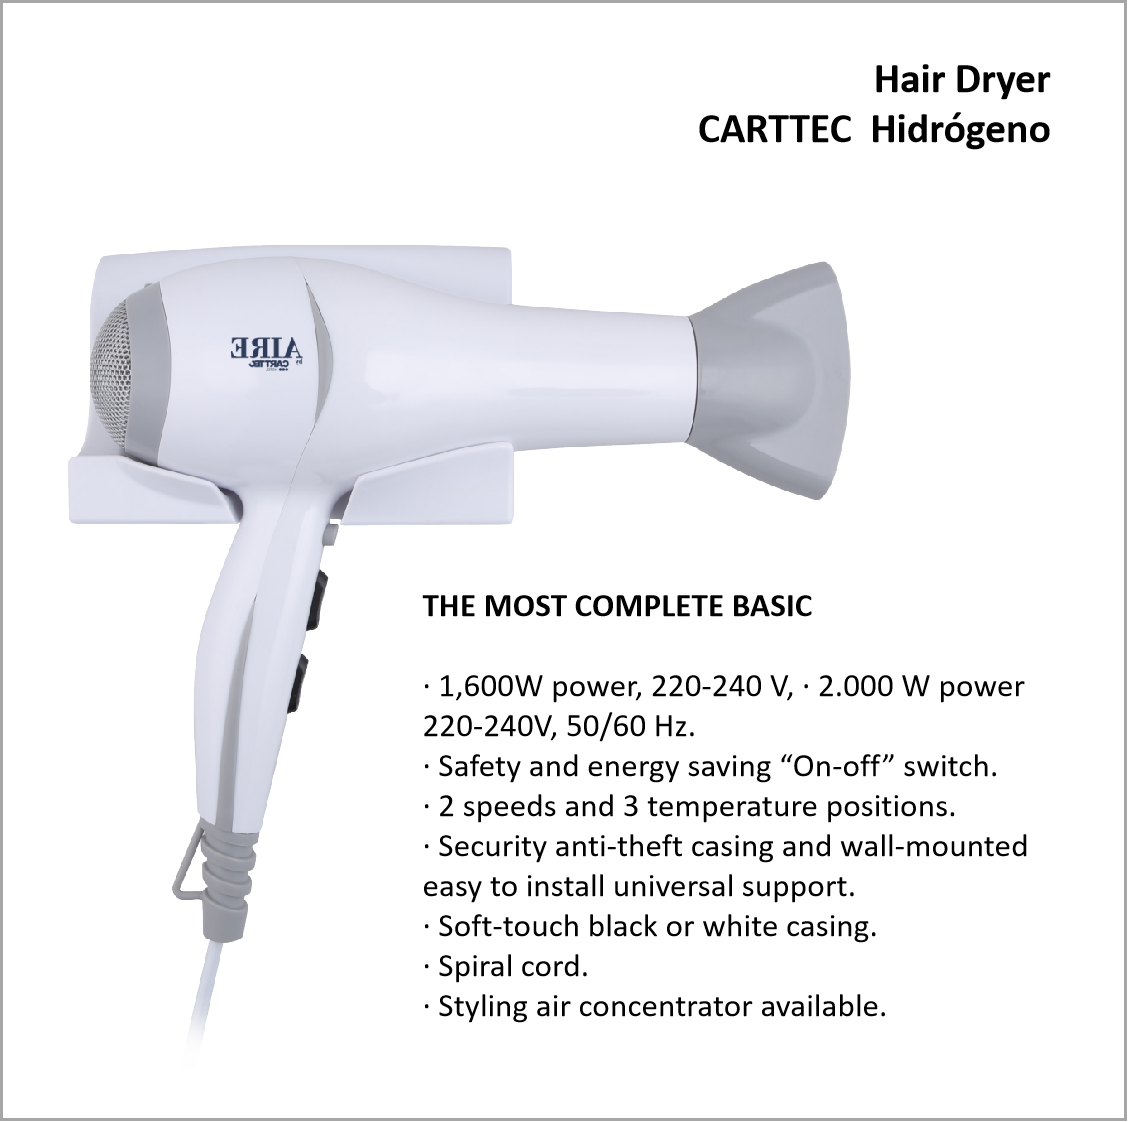 Debaf - CARTTEC Hidrógeno Hair Dryer